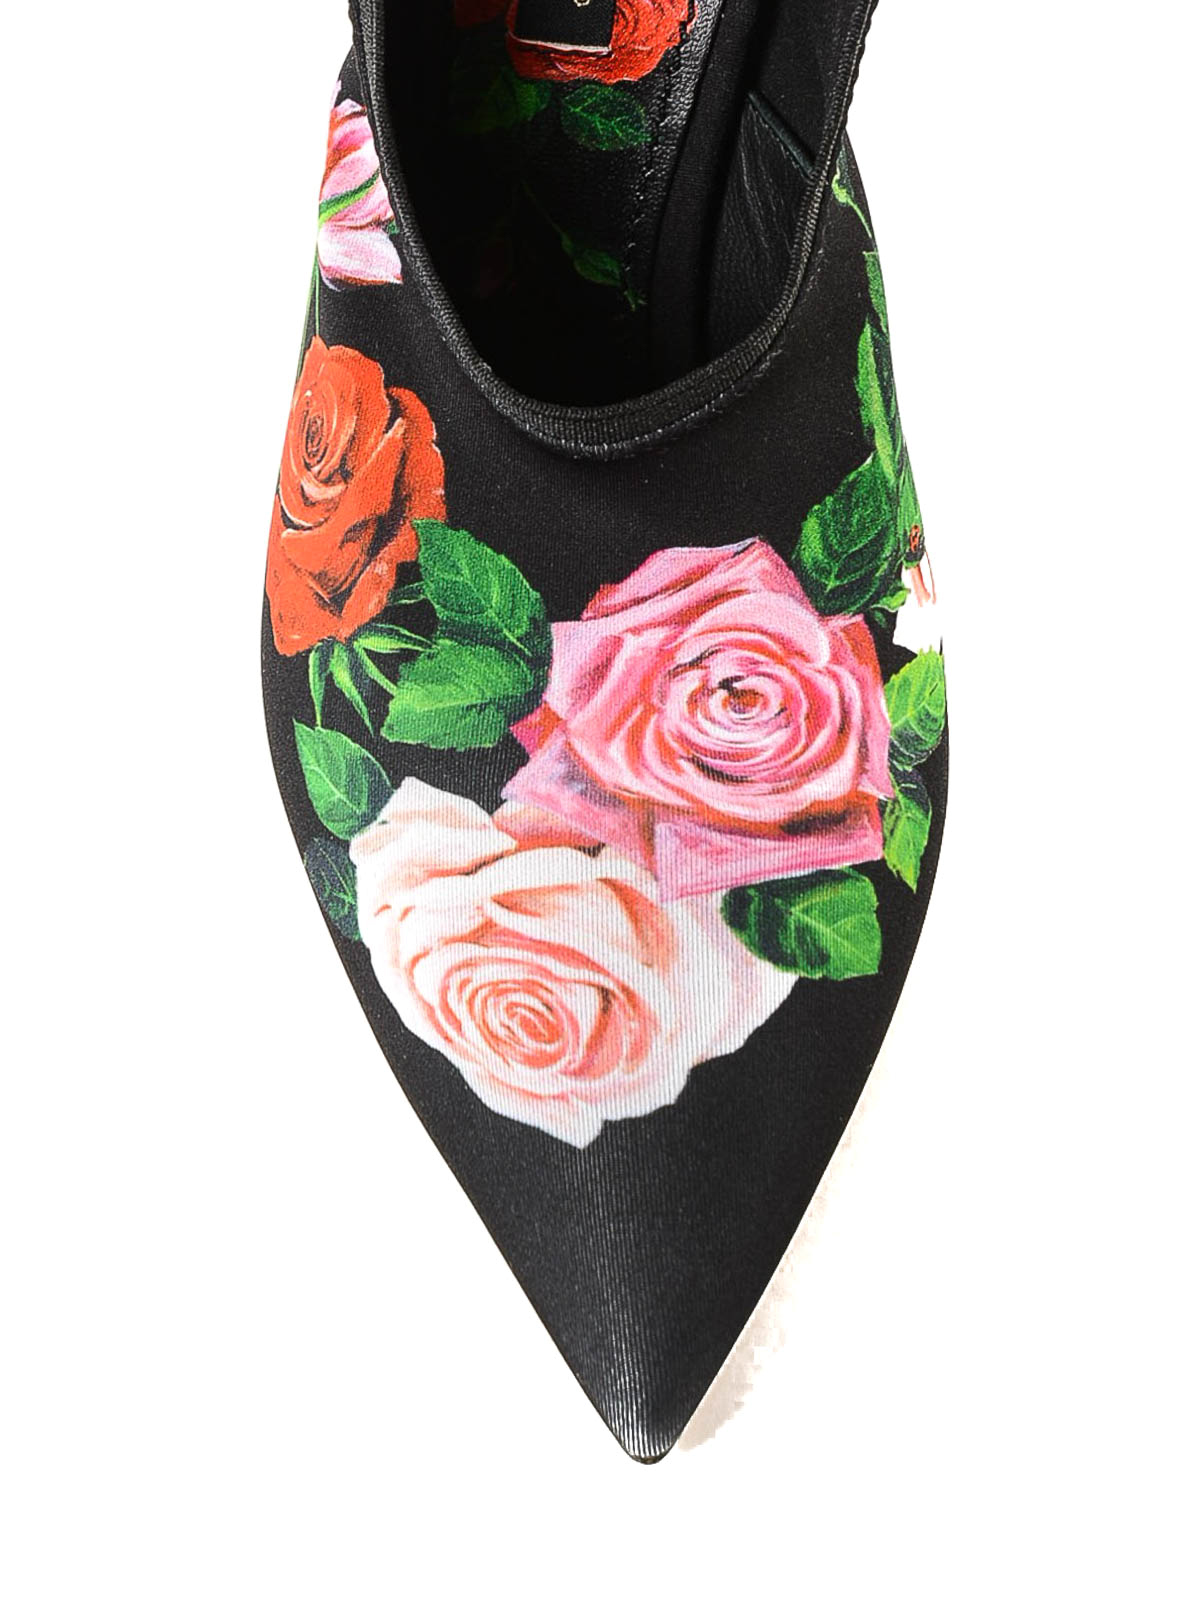 Court shoes Dolce & Gabbana - Floral black fabric sling back -  CG0323AZ481HNX46